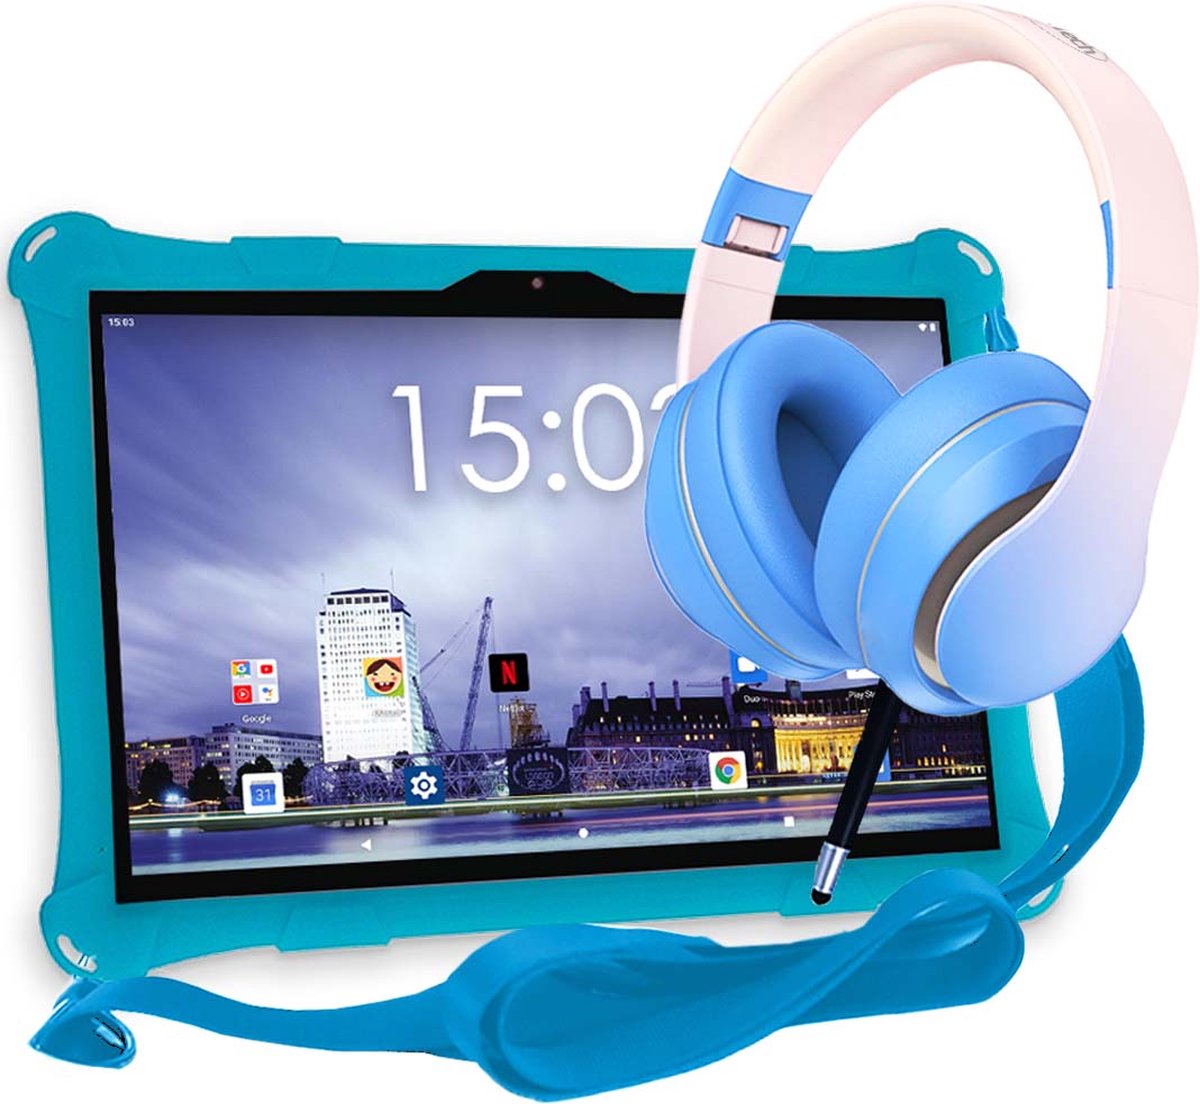 AngelTech Kinderpakket XL - Kindertablet XL + Kinderkoptelefoon - Combipakket - Blauw